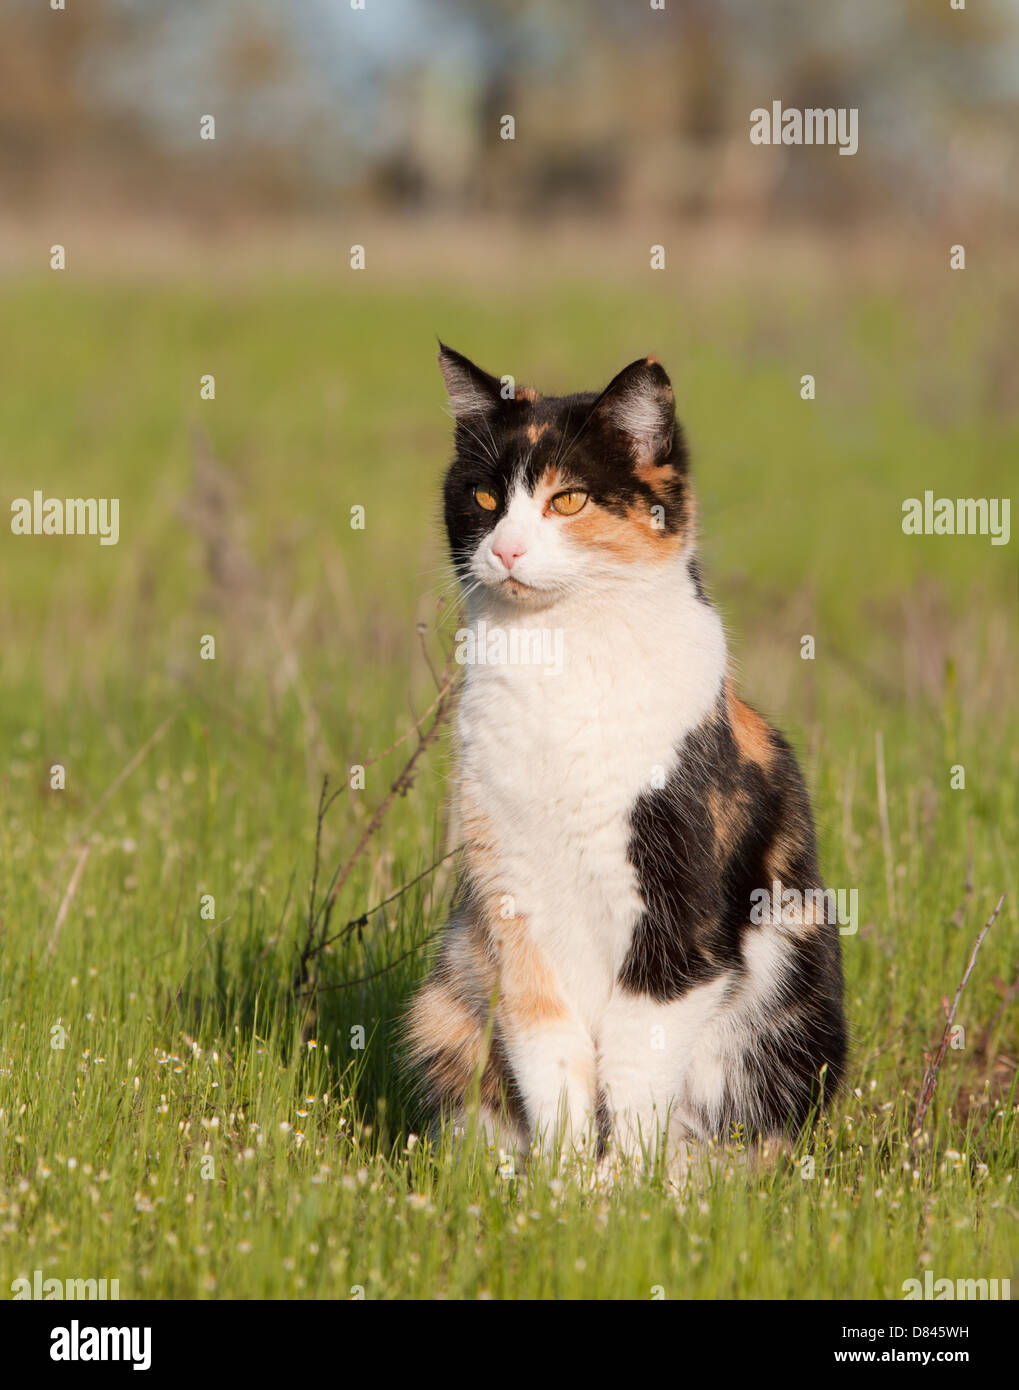 Beau chat calico en vert clair spring grass Banque D'Images